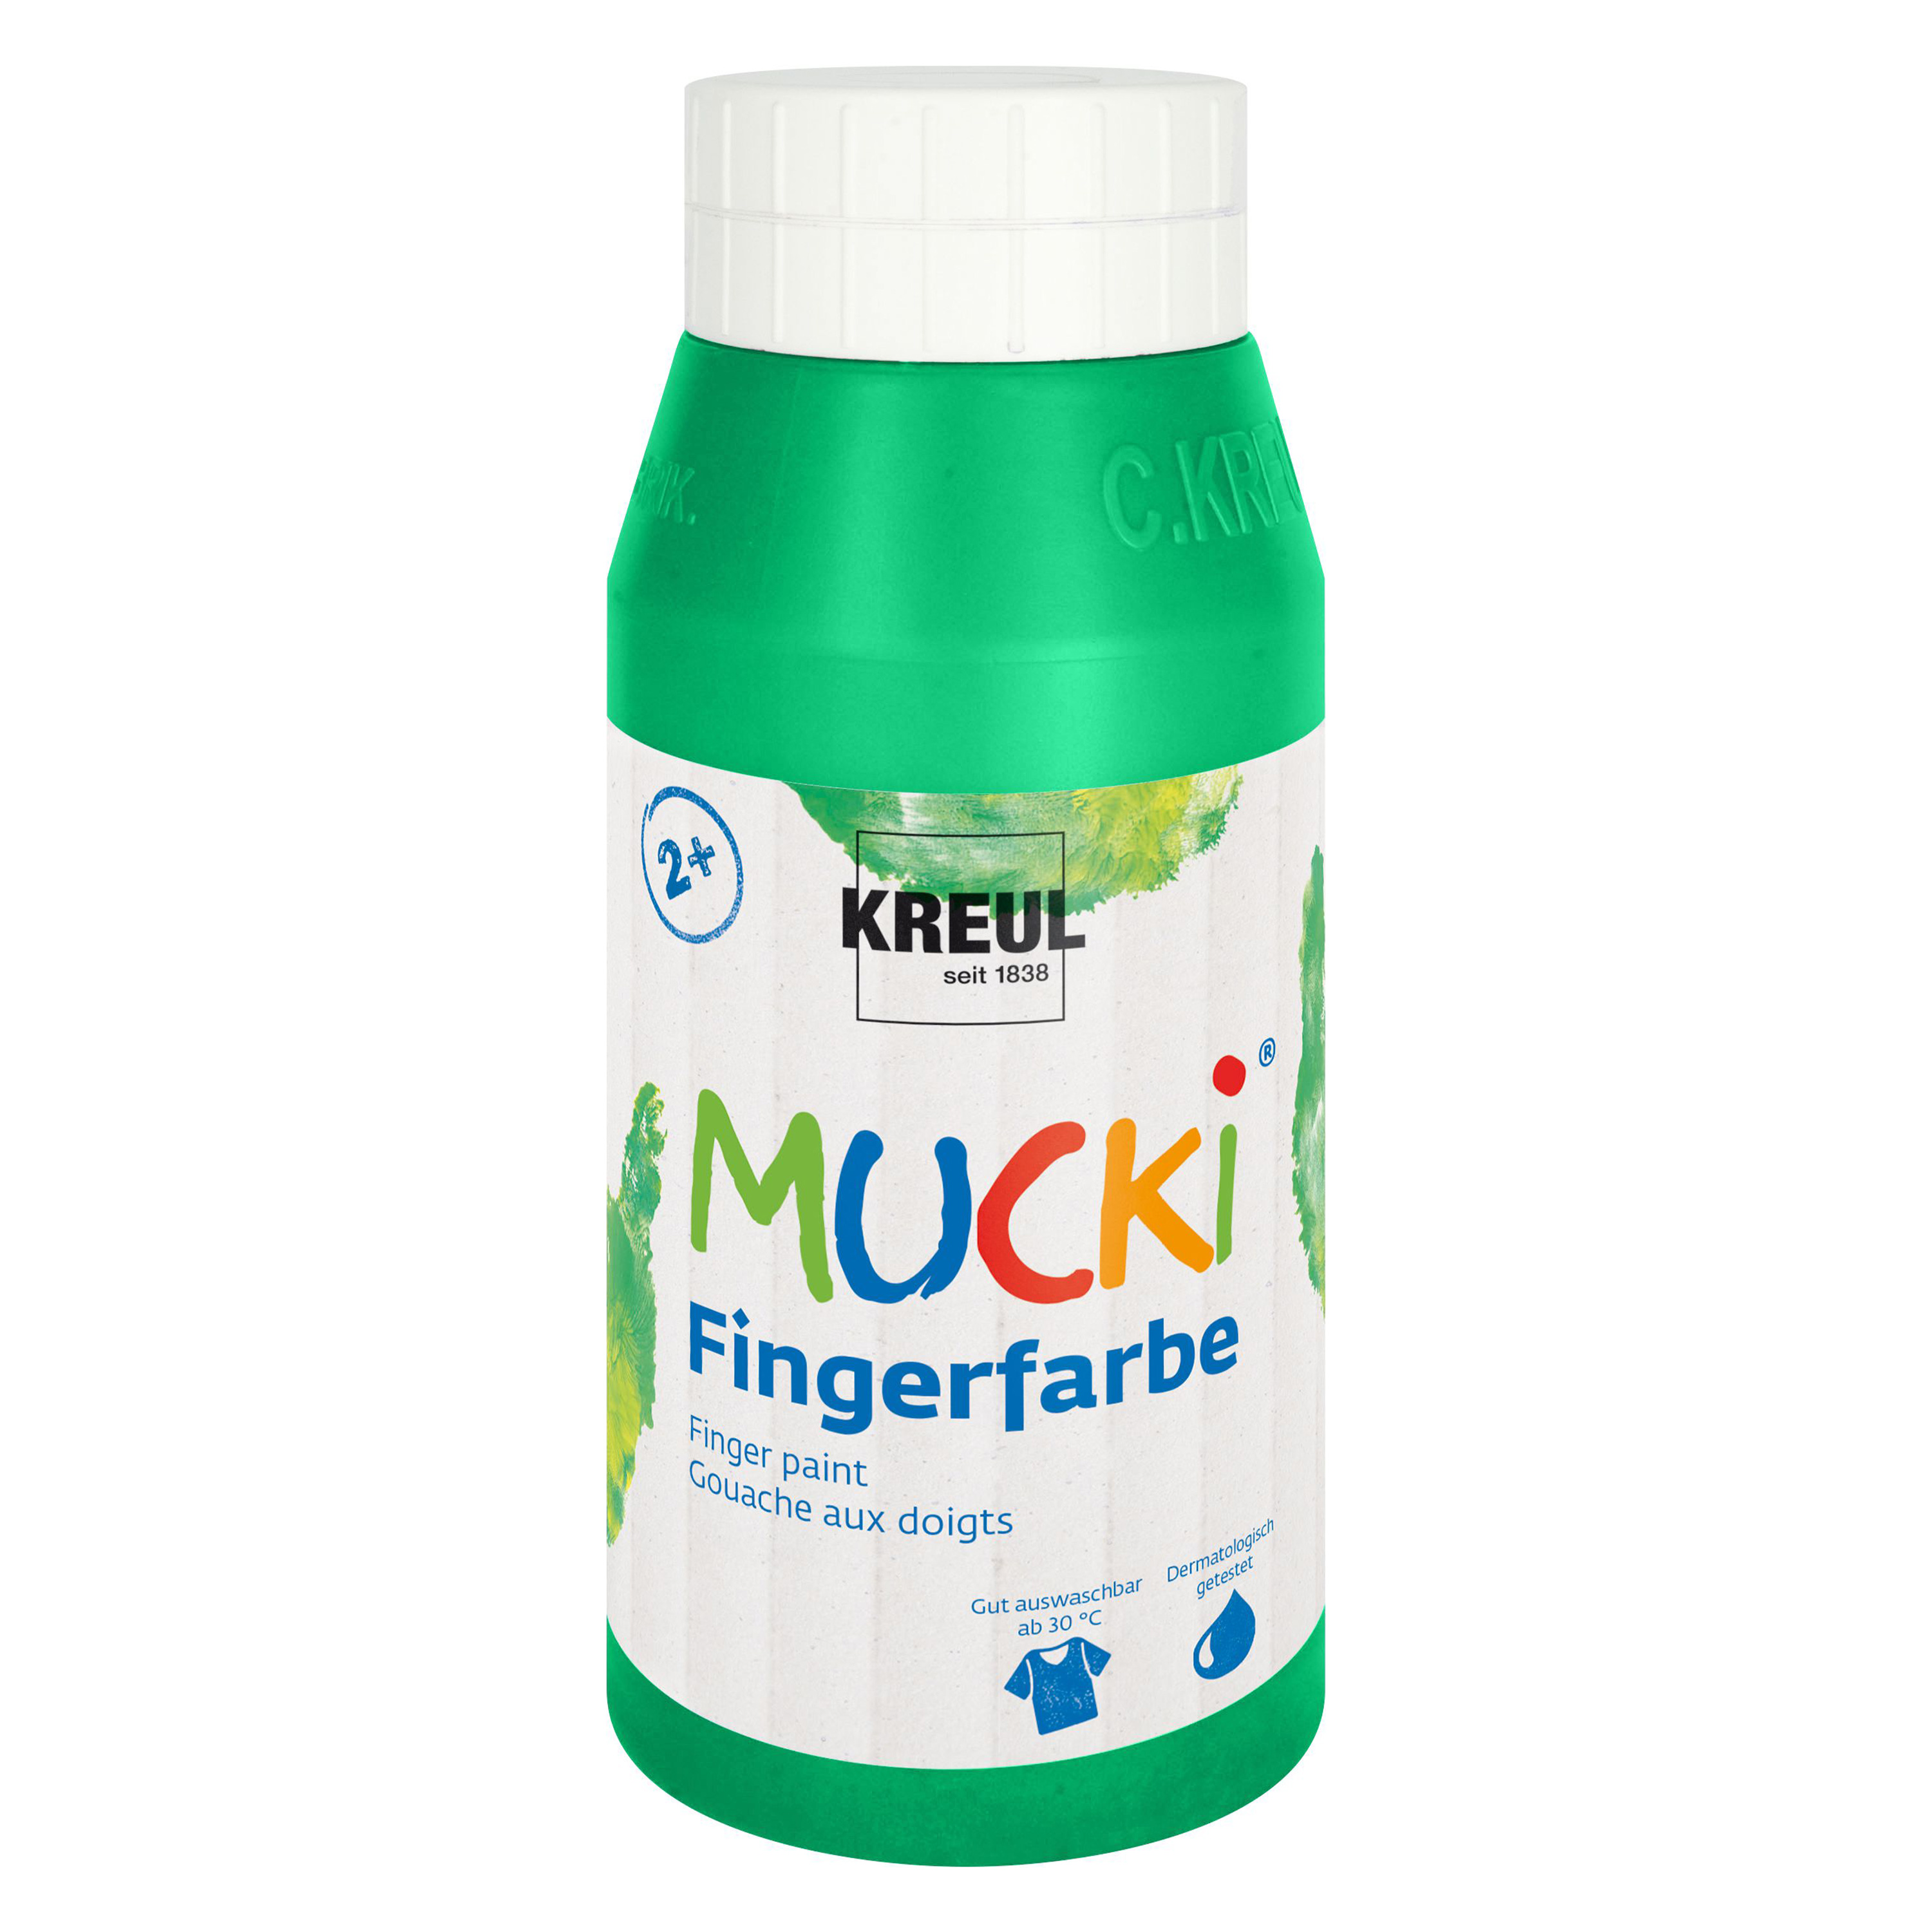 MUCKI Fingerfarbe, 750 ml, grün